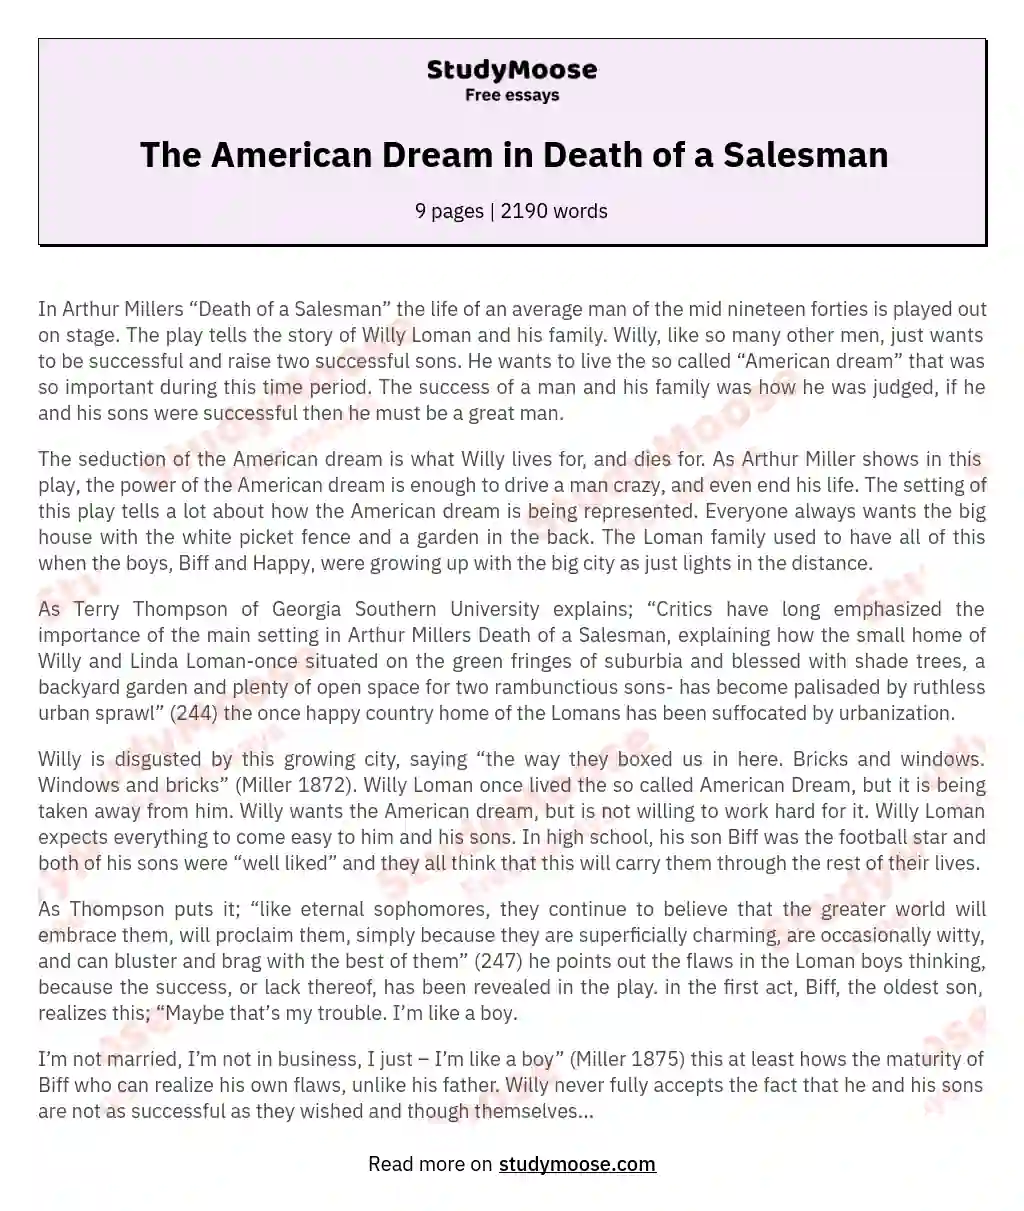 The American Dream in Death of a Salesman essay